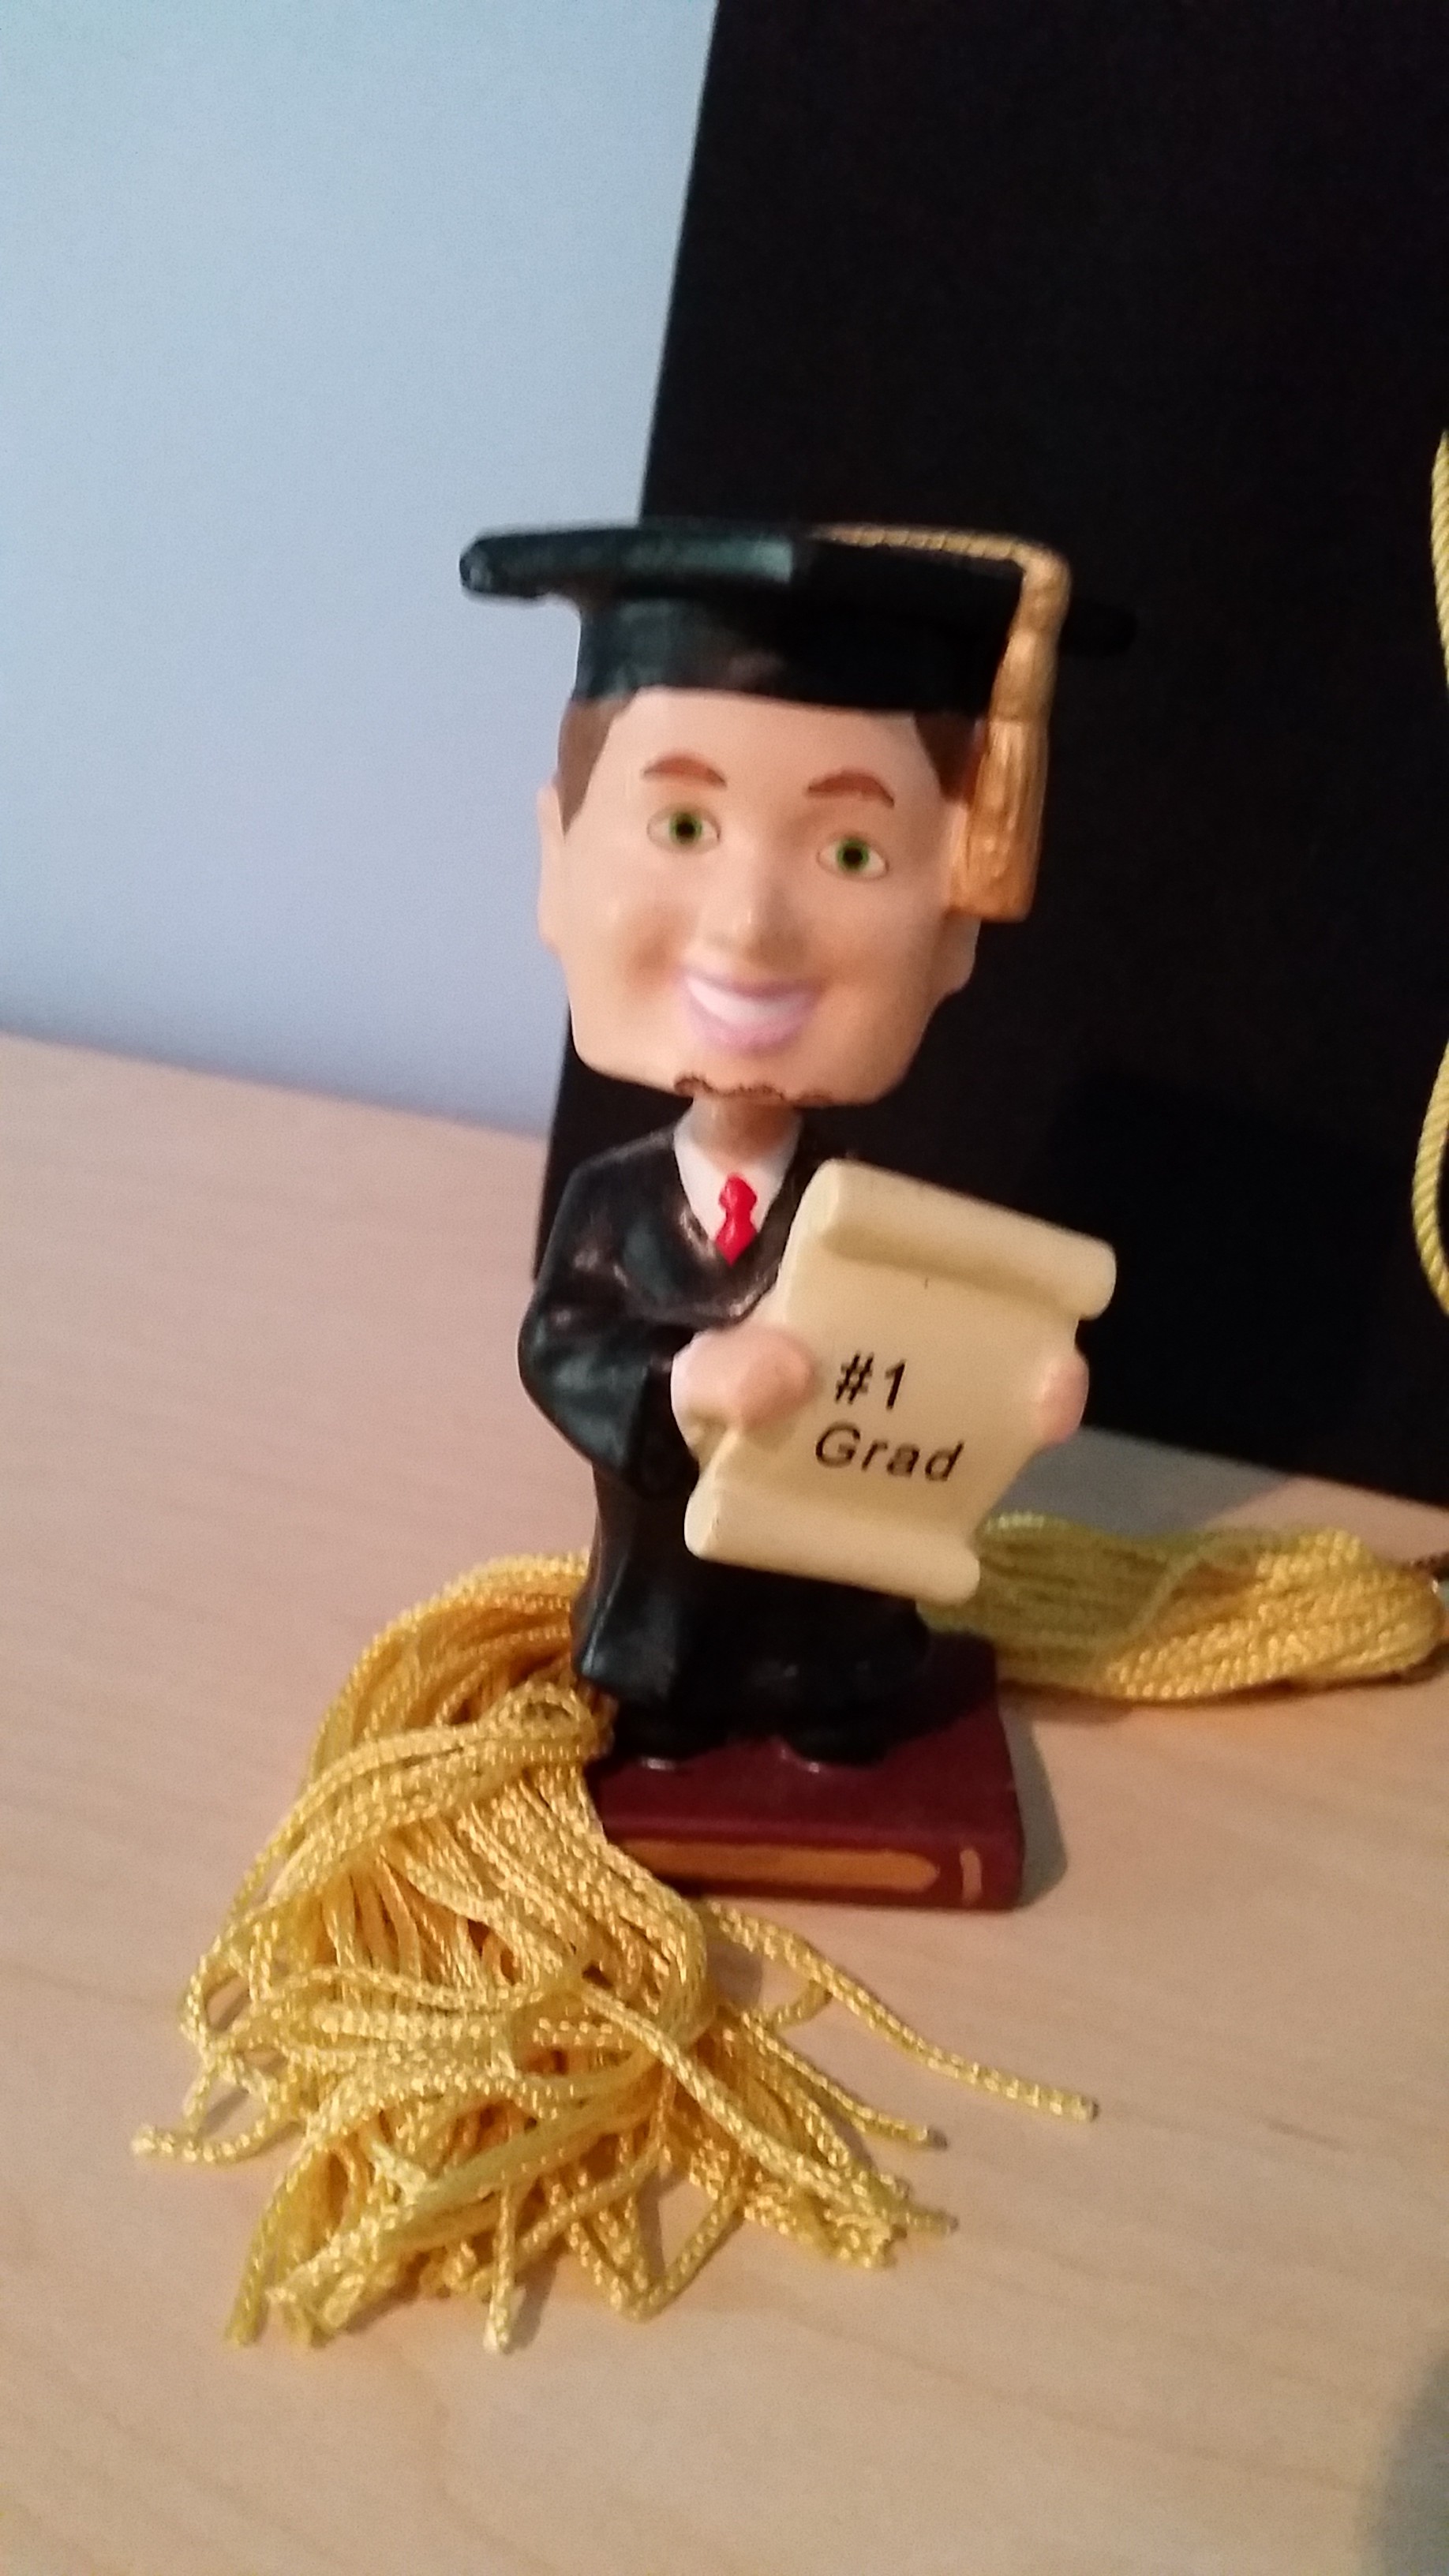 Graduating student